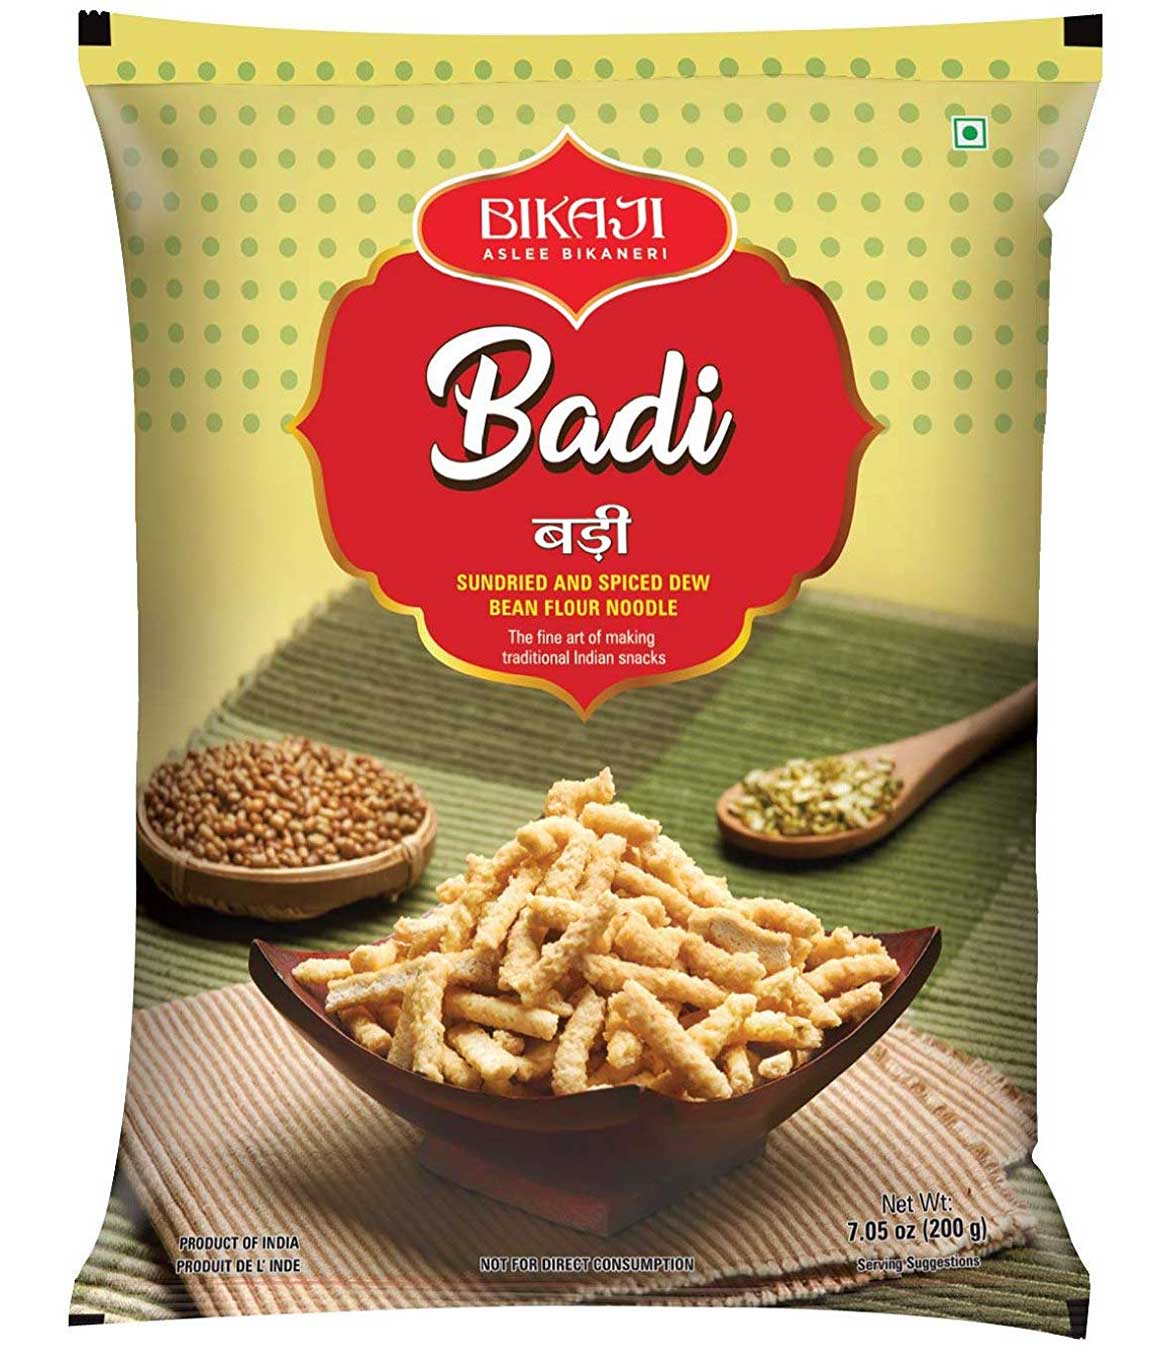 Bikaji Badi - Traditional Rajasthani Moth Dal Mangodi - Sundried and Spiced Dew Bean Flour Noodles -100% Vegetarian Indian Snack - 200gm - (Pack of 4)